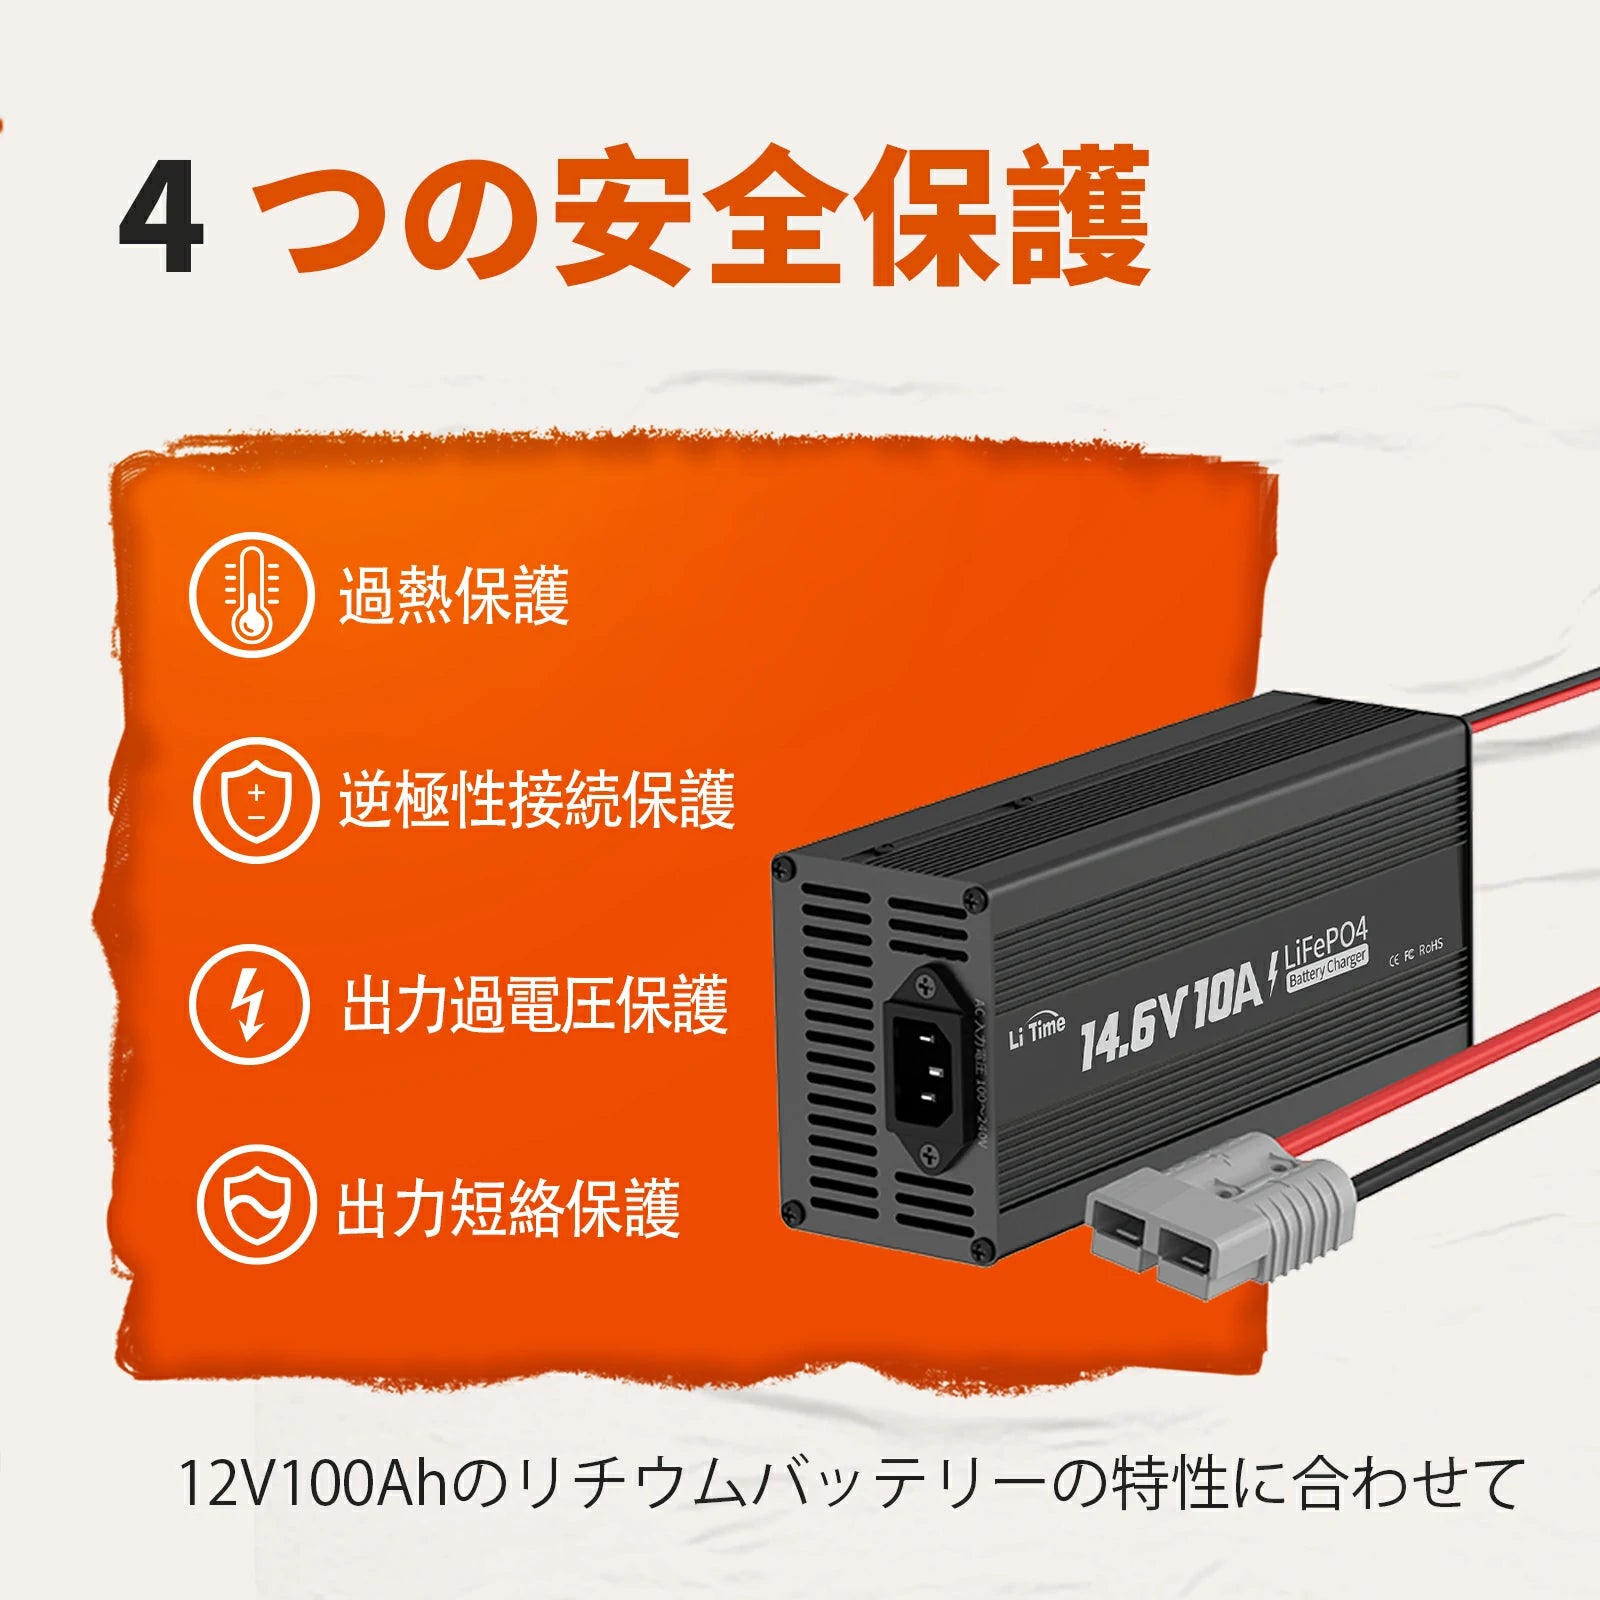 LiTime 14.6V10A リチウム イオン バッテリー 充電 器 リン酸鉄 https://jp.litime.com/products/14-6v-10a